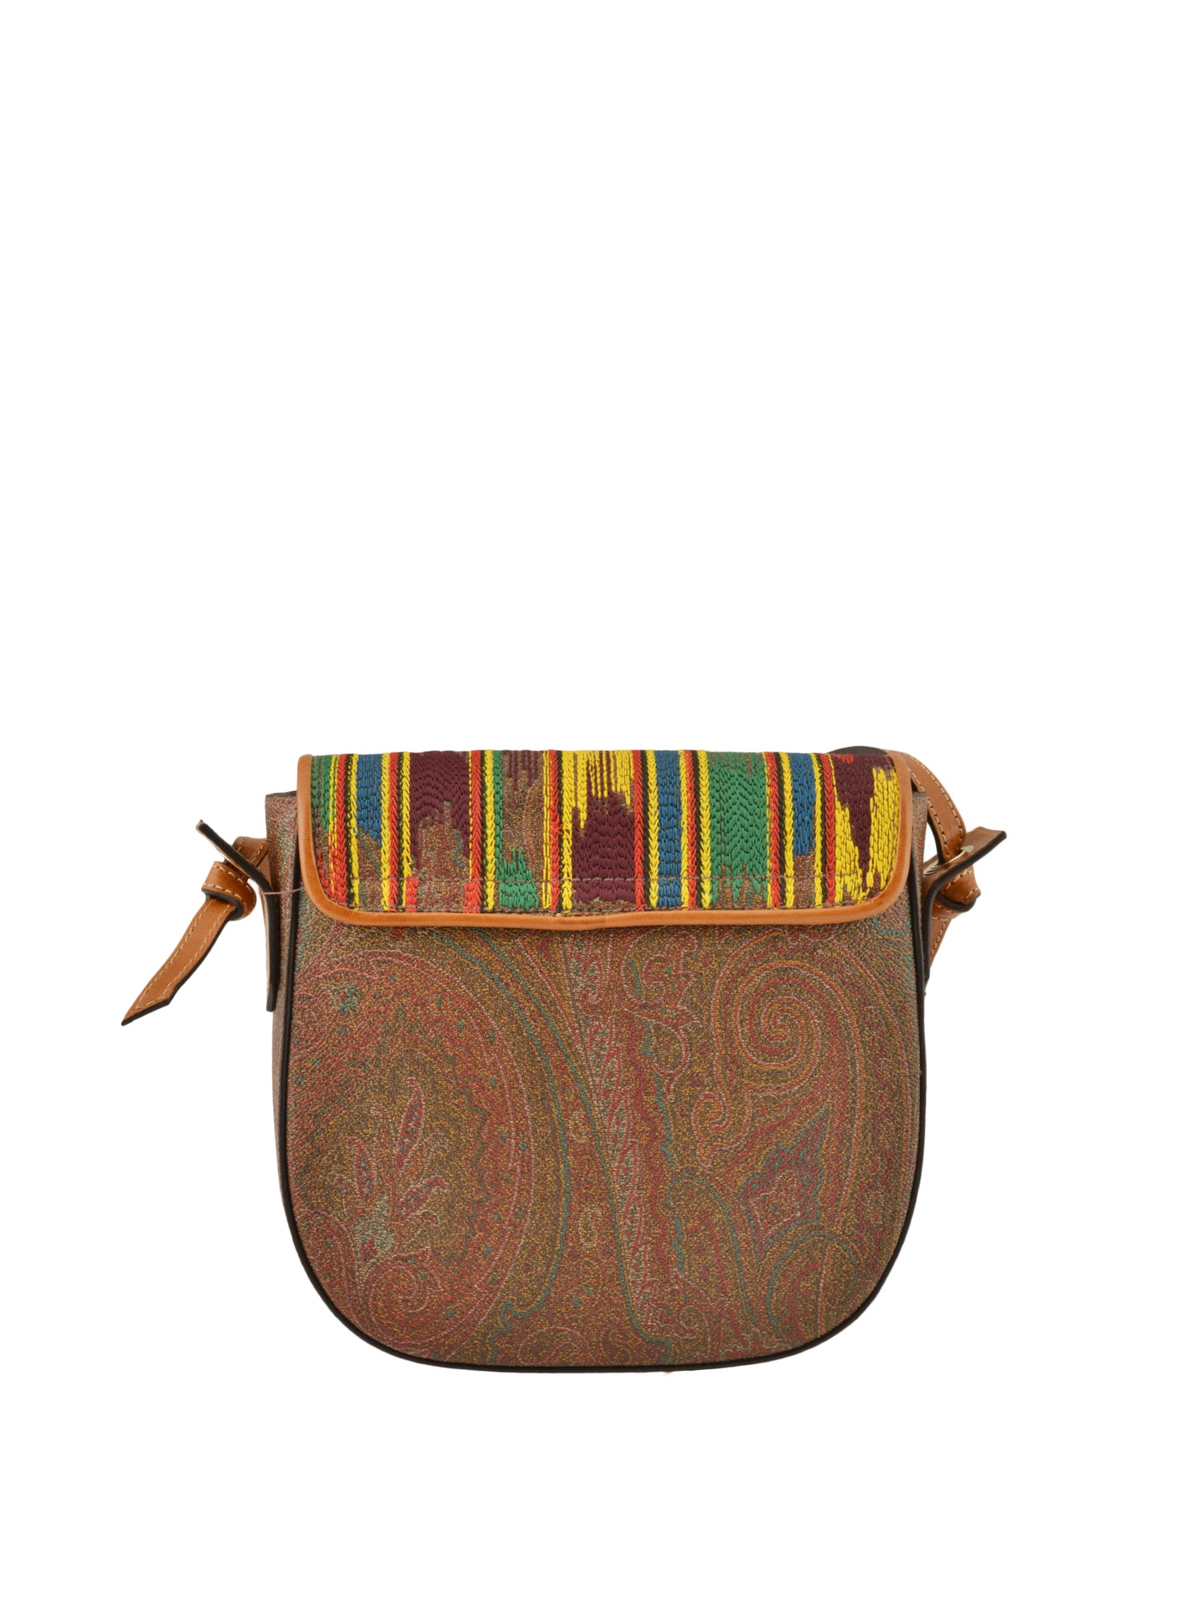 Genuine ETRO paisley tribal flap signature leather shoulder bag crossbody